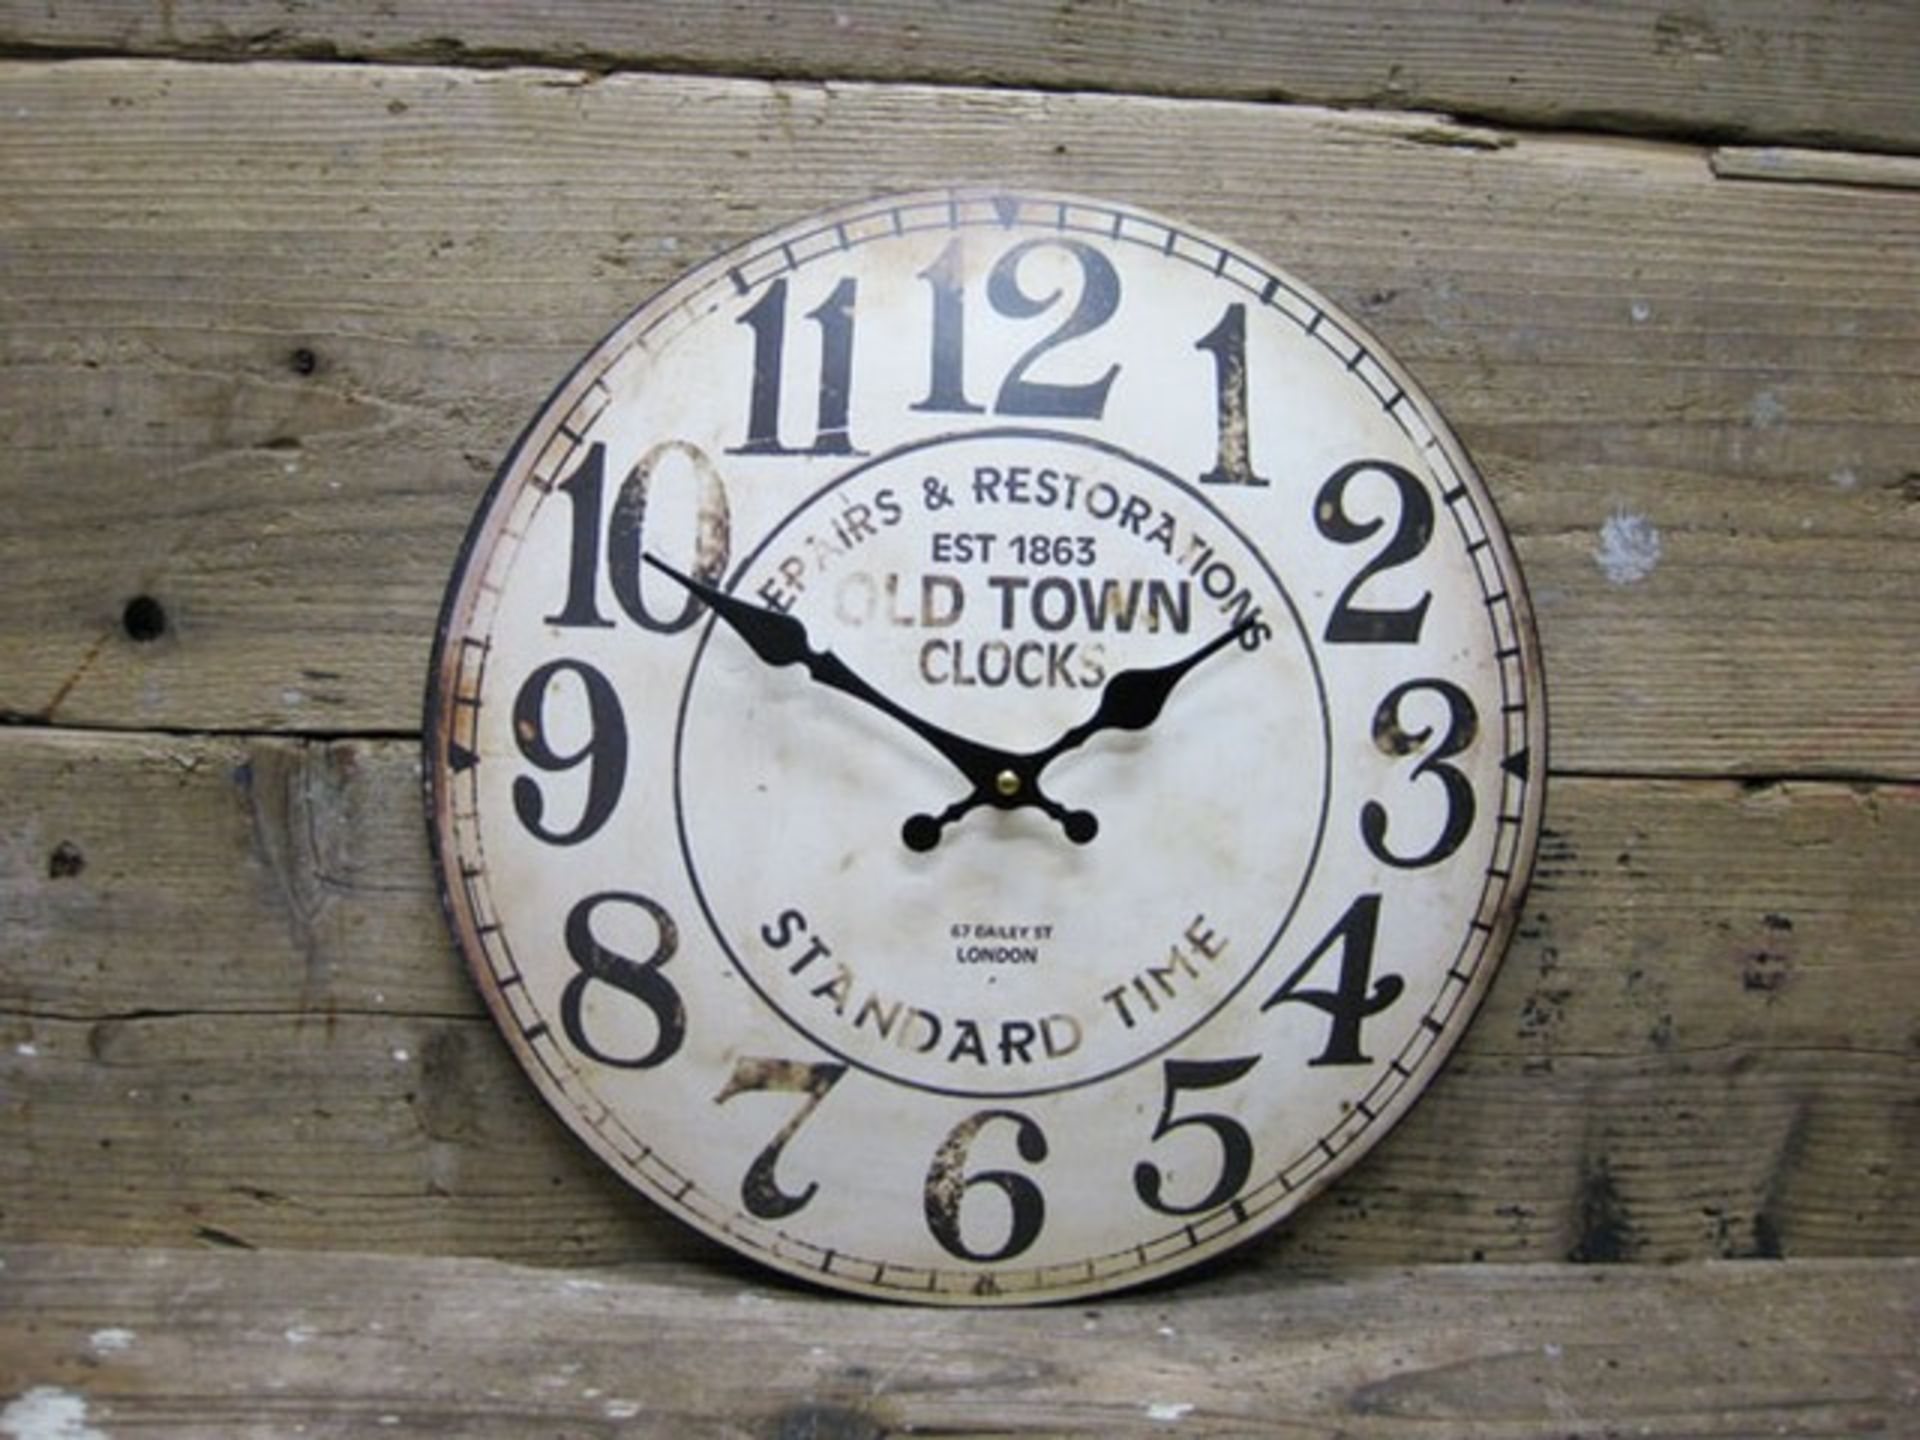 V Brand New Old Town Clocks Standard Time Wall Clock